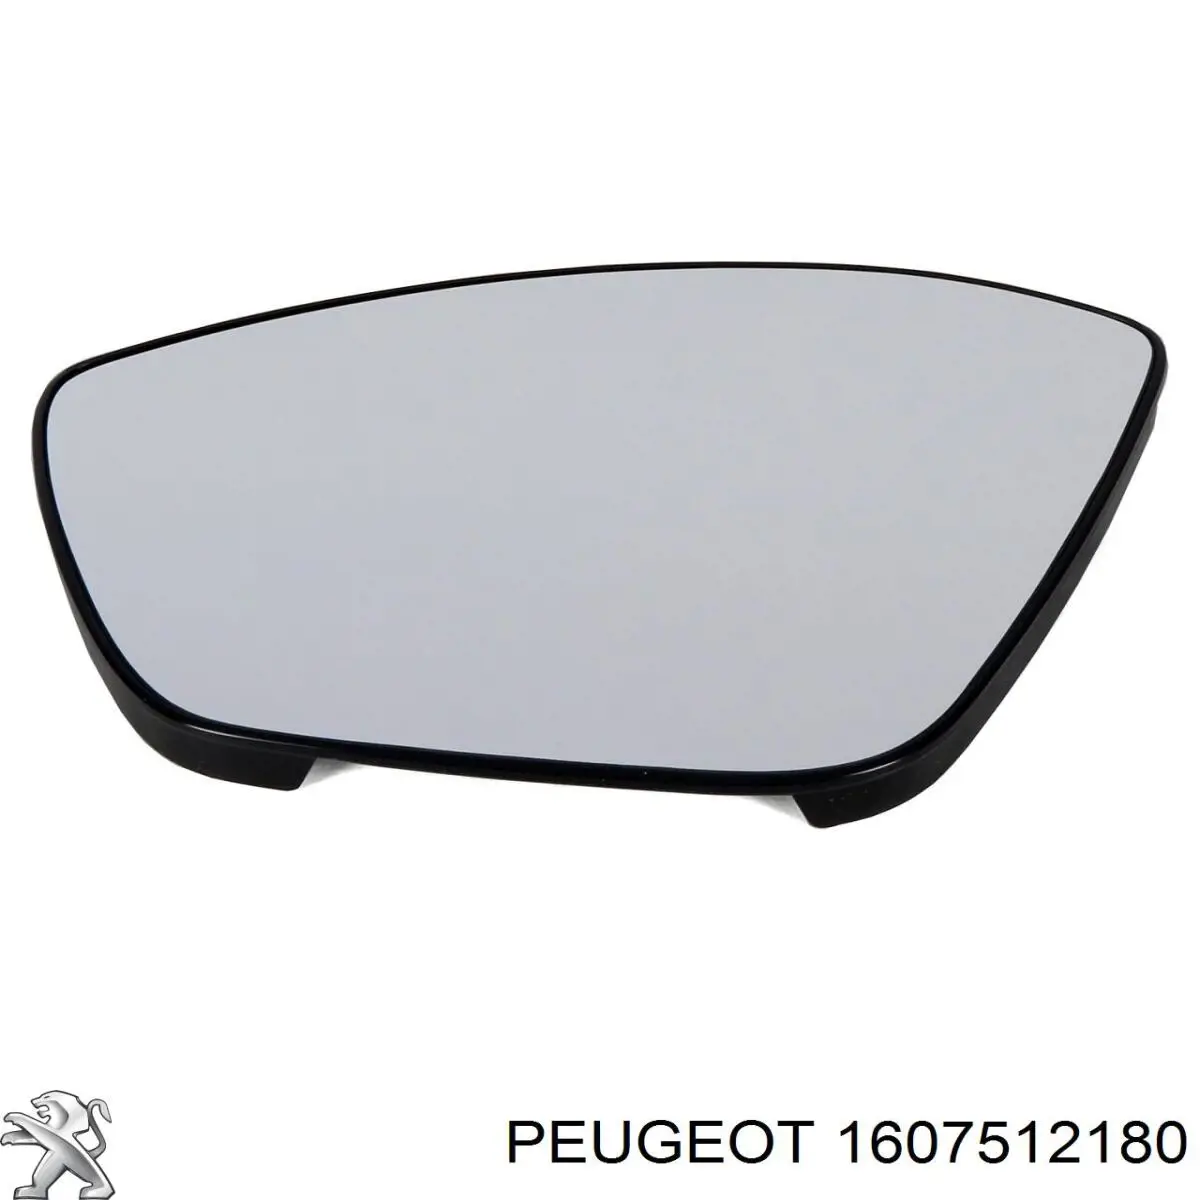 Cristal De Espejo Retrovisor Exterior Izquierdo 1607512180 Peugeot/Citroen